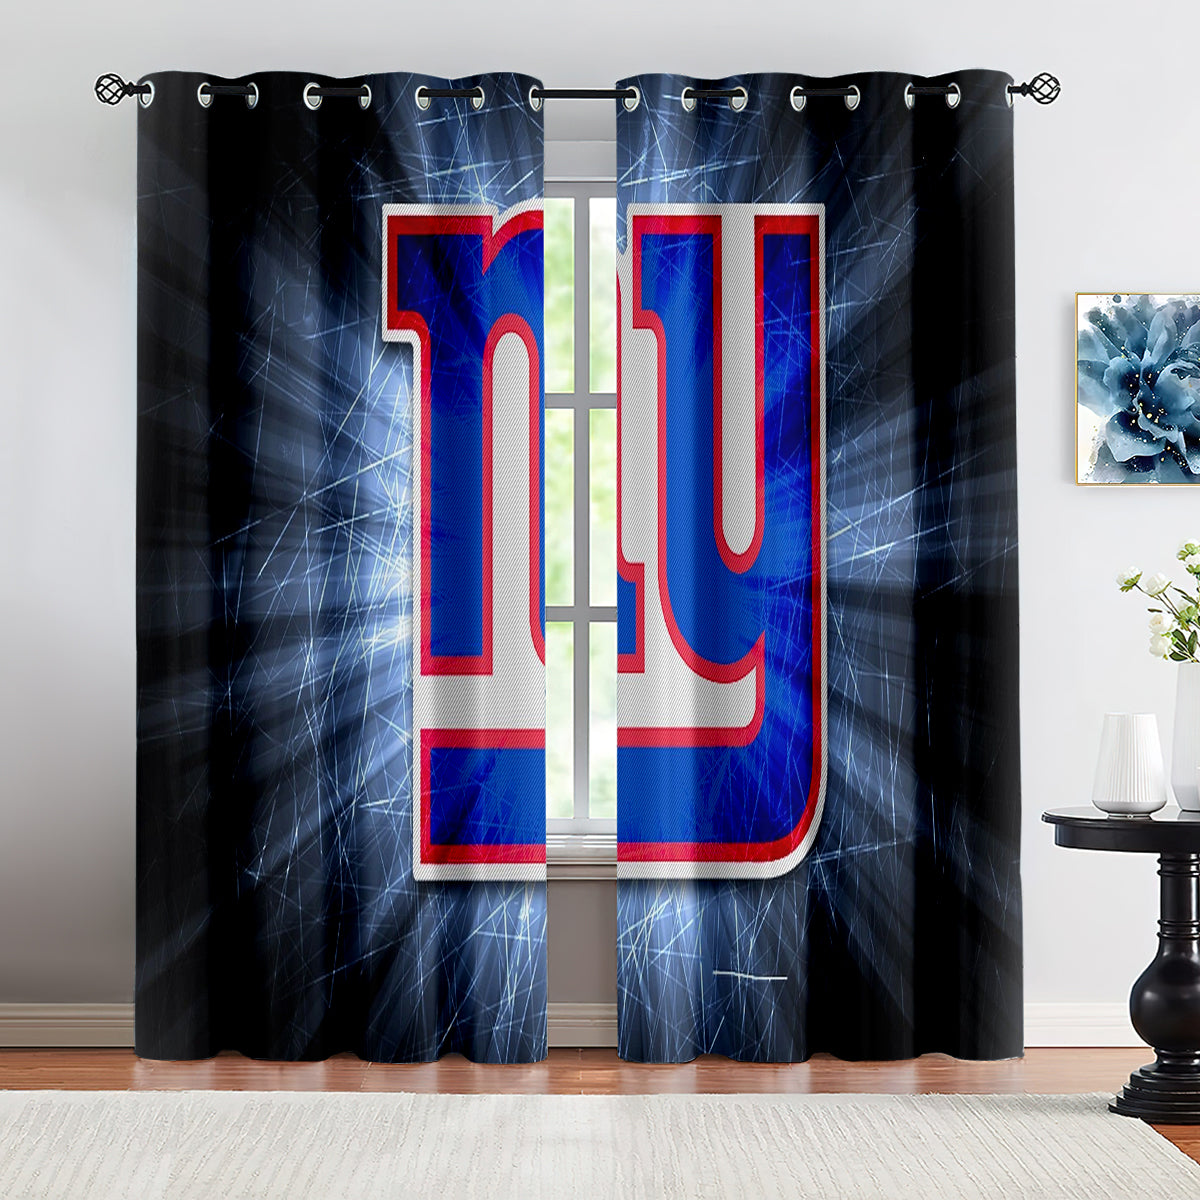 New York Giants Football Team Blackout Curtains Drapes For Window Treatment Set